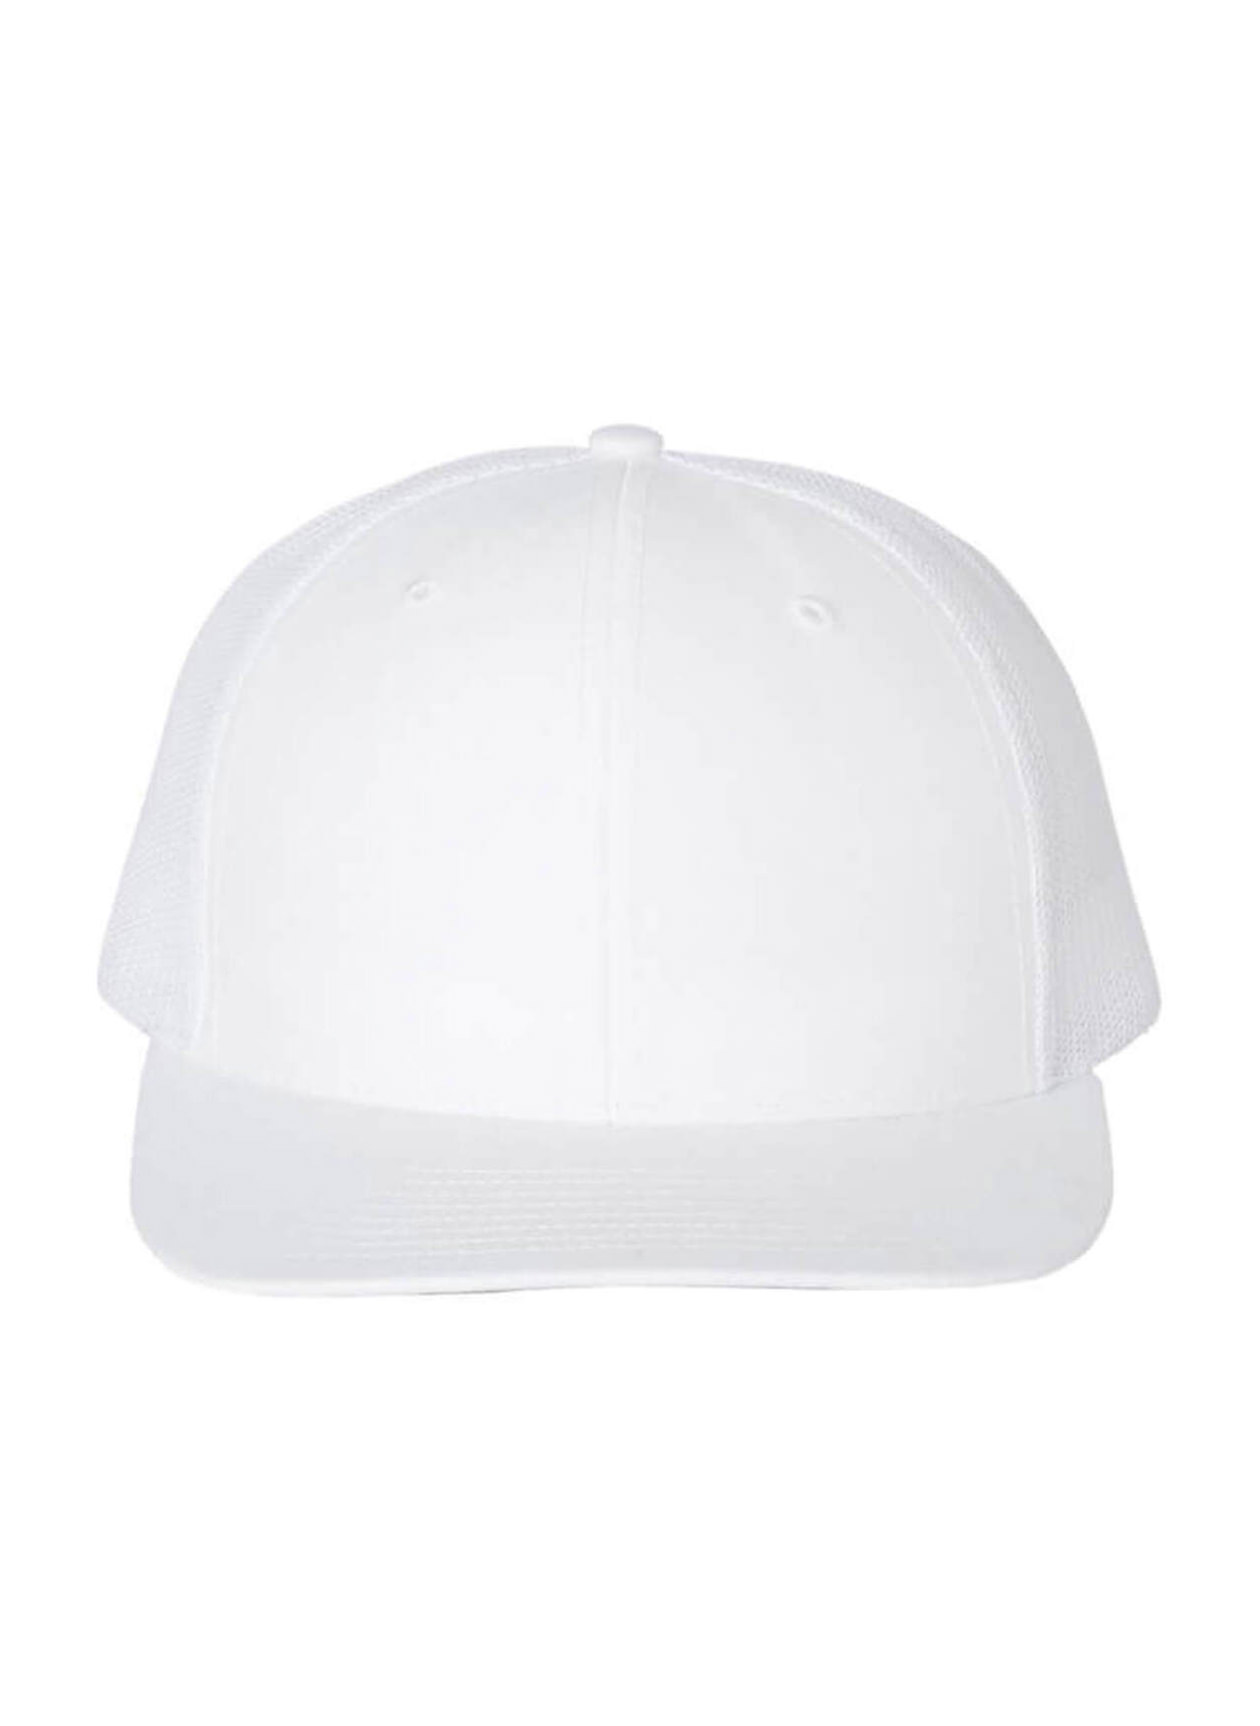 Richardson White Adjustable Snapback Trucker Hat